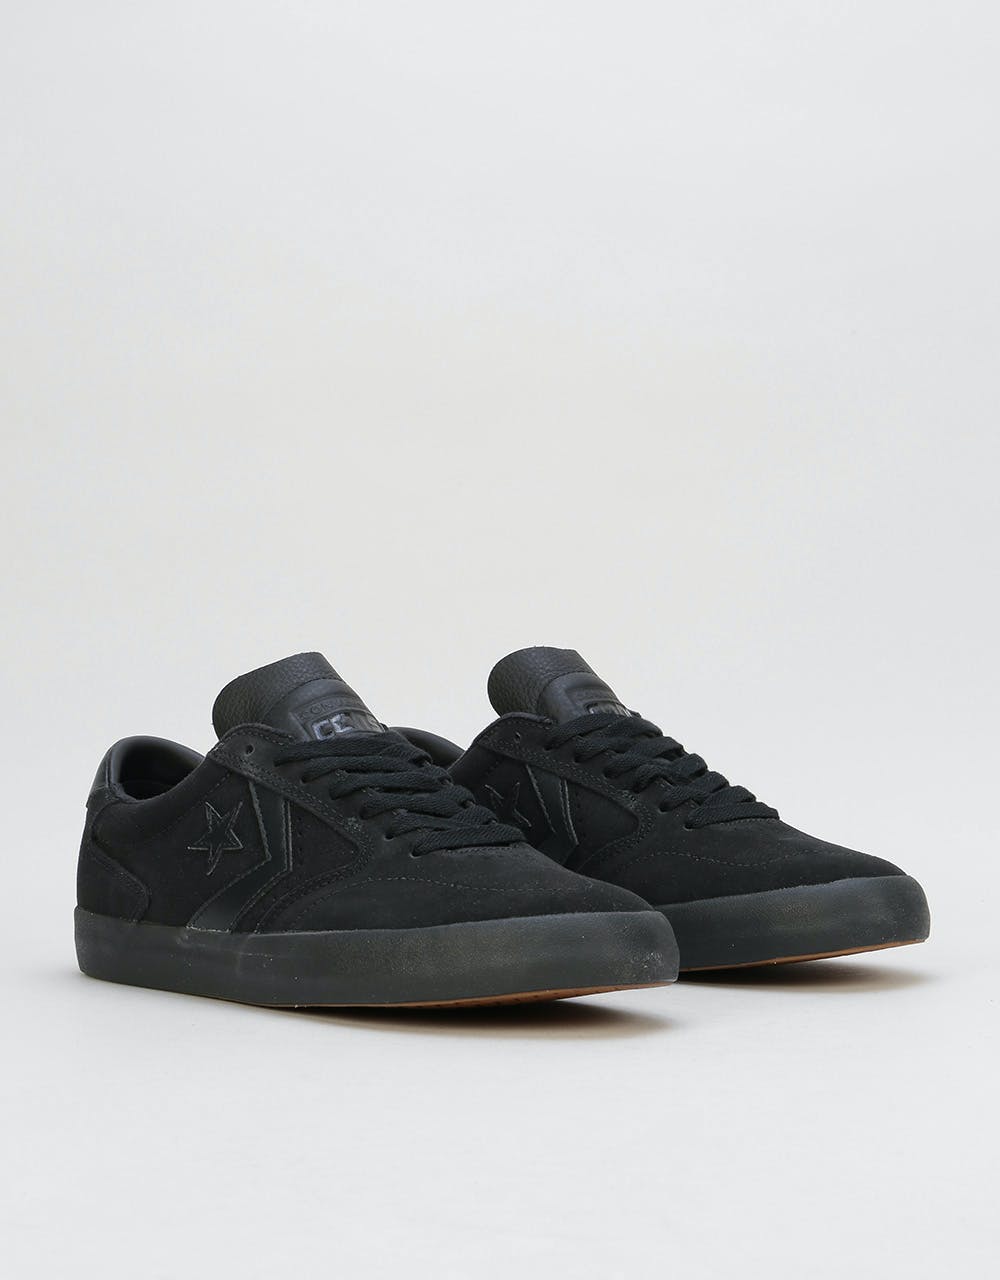 Converse Checkpoint Pro Skate Shoes - Black/Black/Black